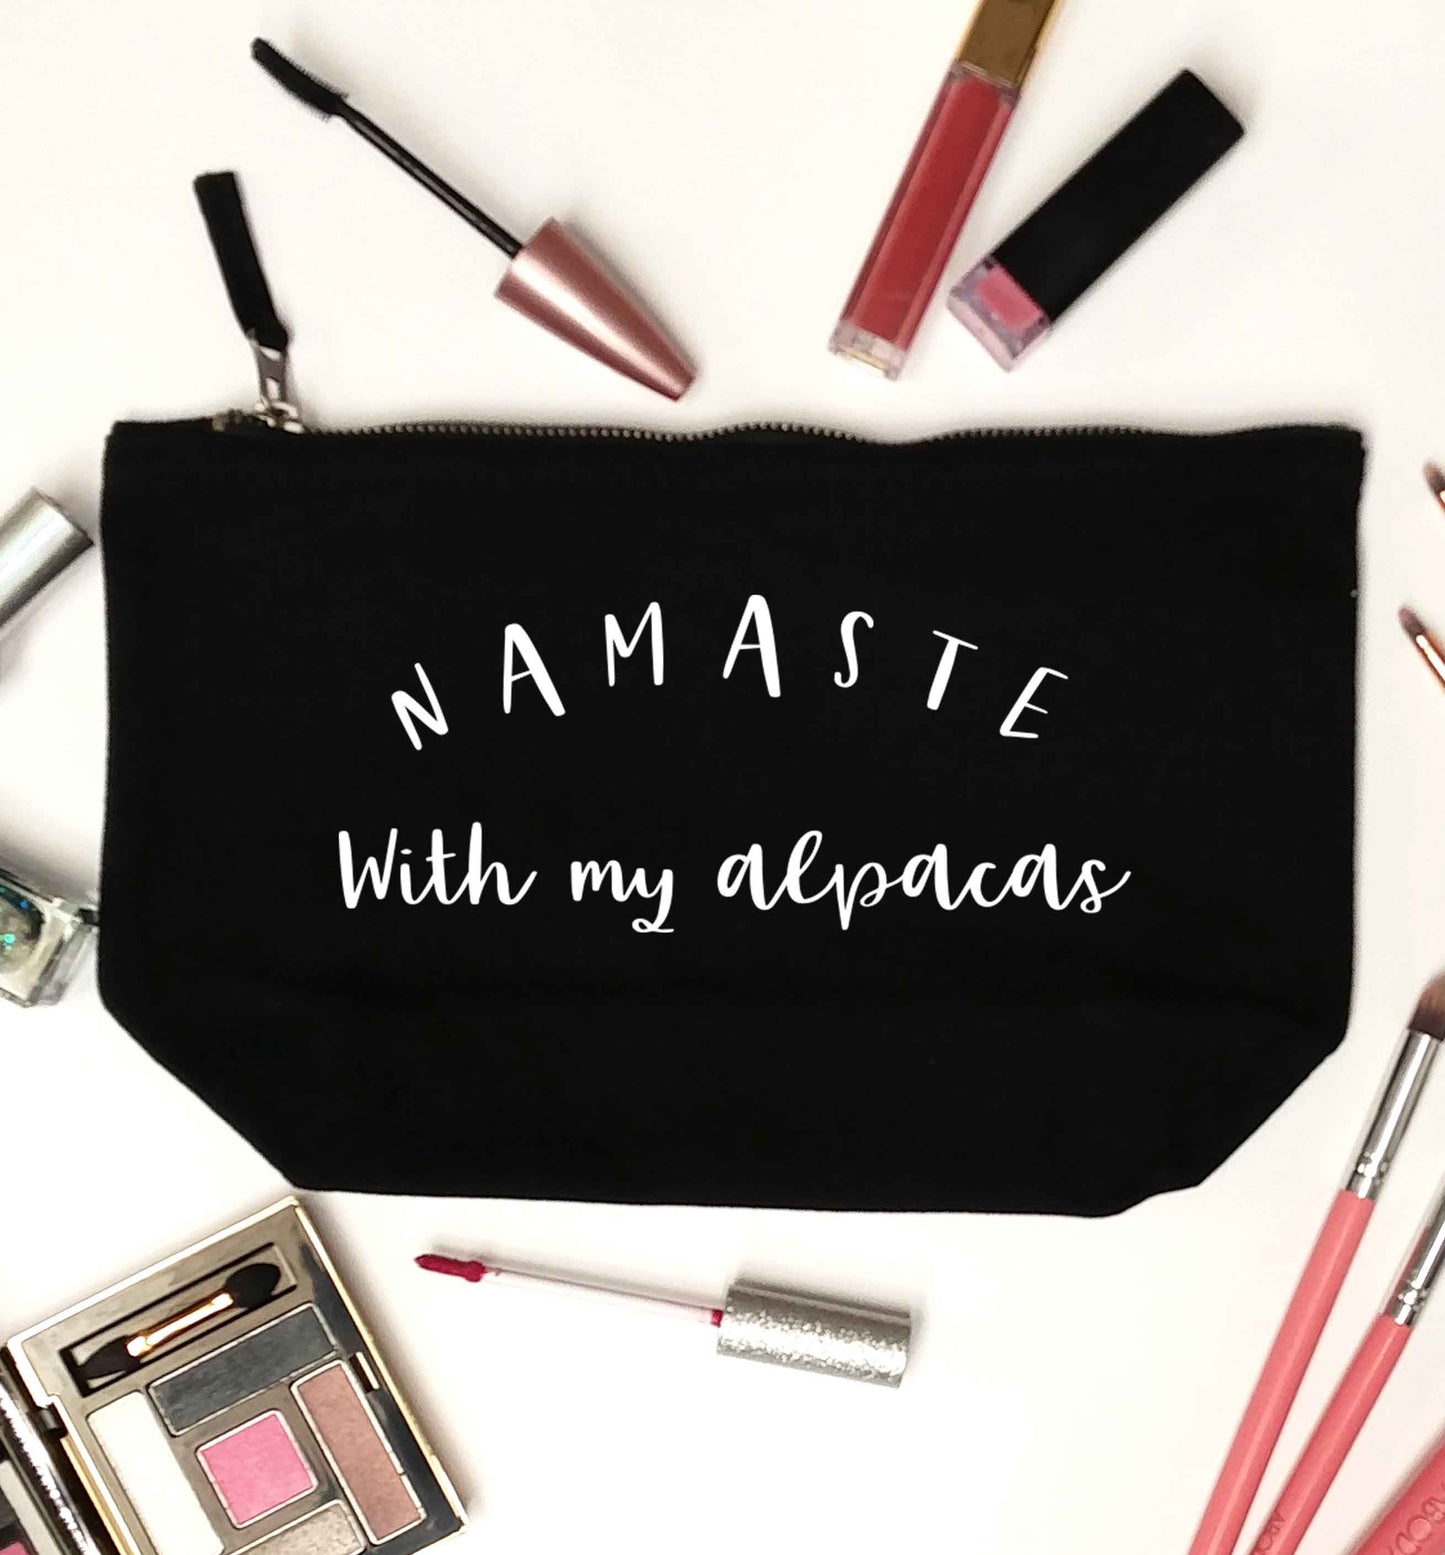 Namaste with my alpacas black makeup bag